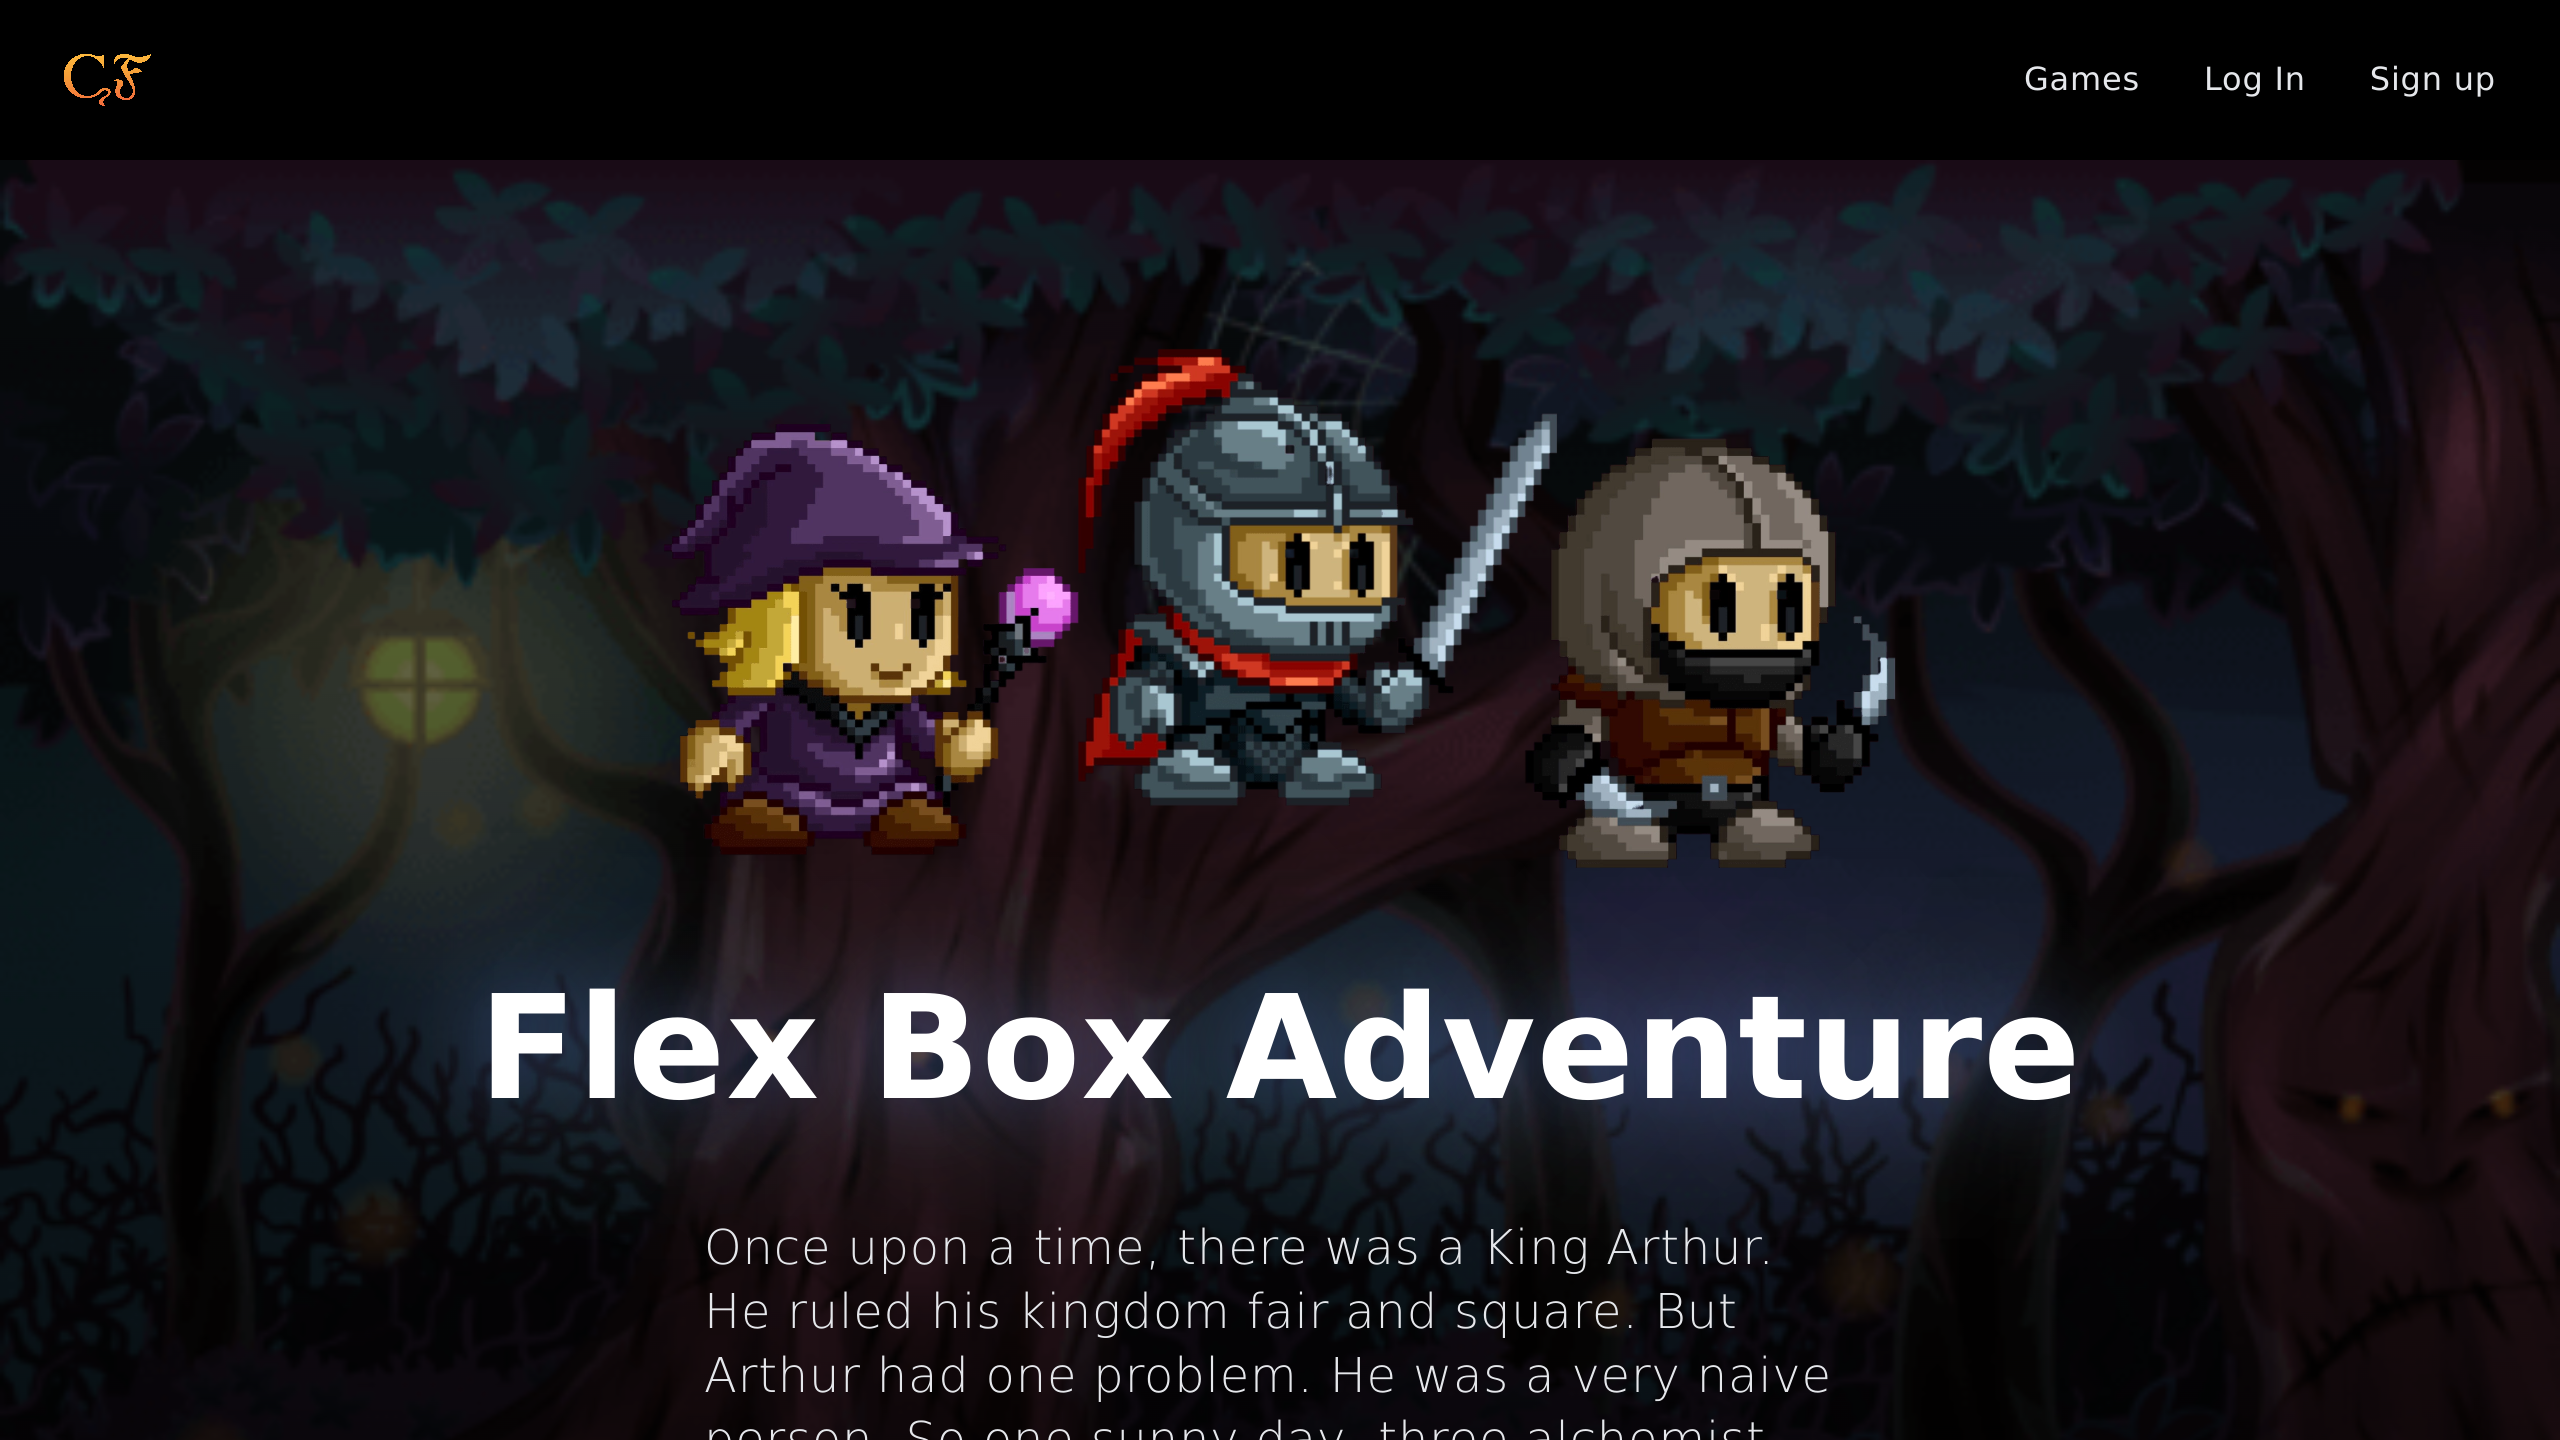 Flexbox Adventure's website screenshot